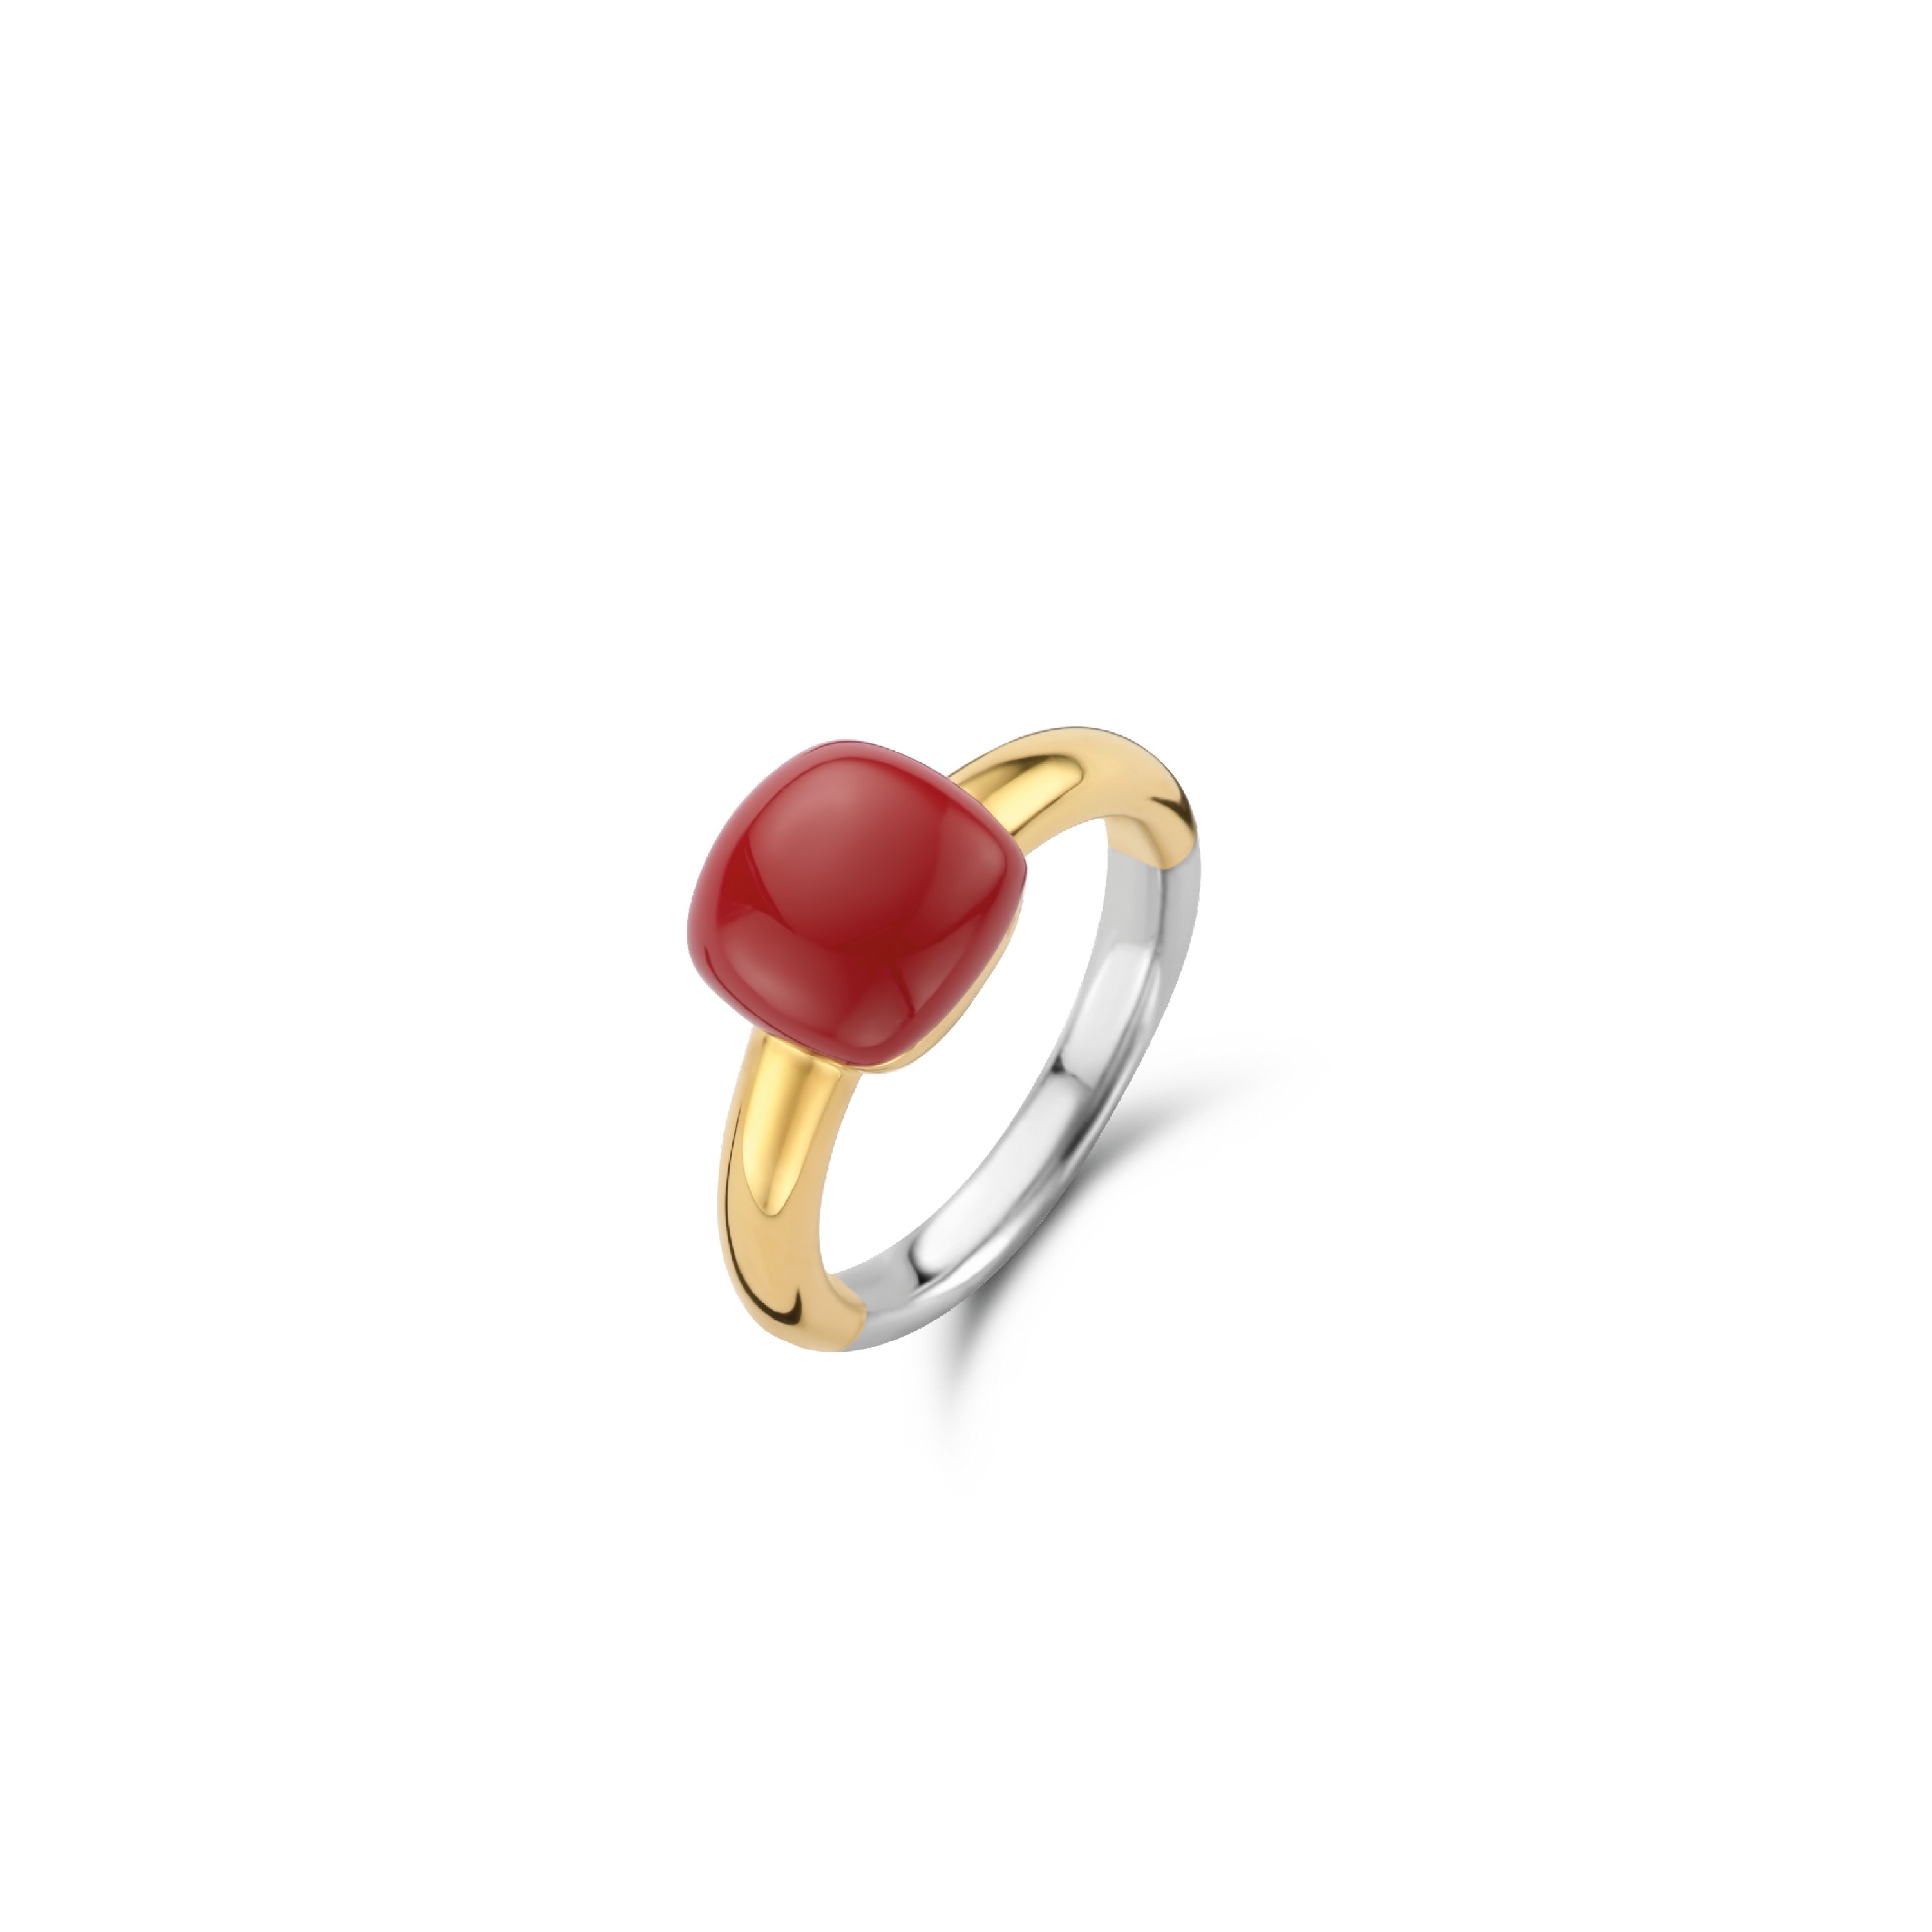 TI SENTO - Milano Ring 12187CR Gala Jewelers Inc. White Oak, PA